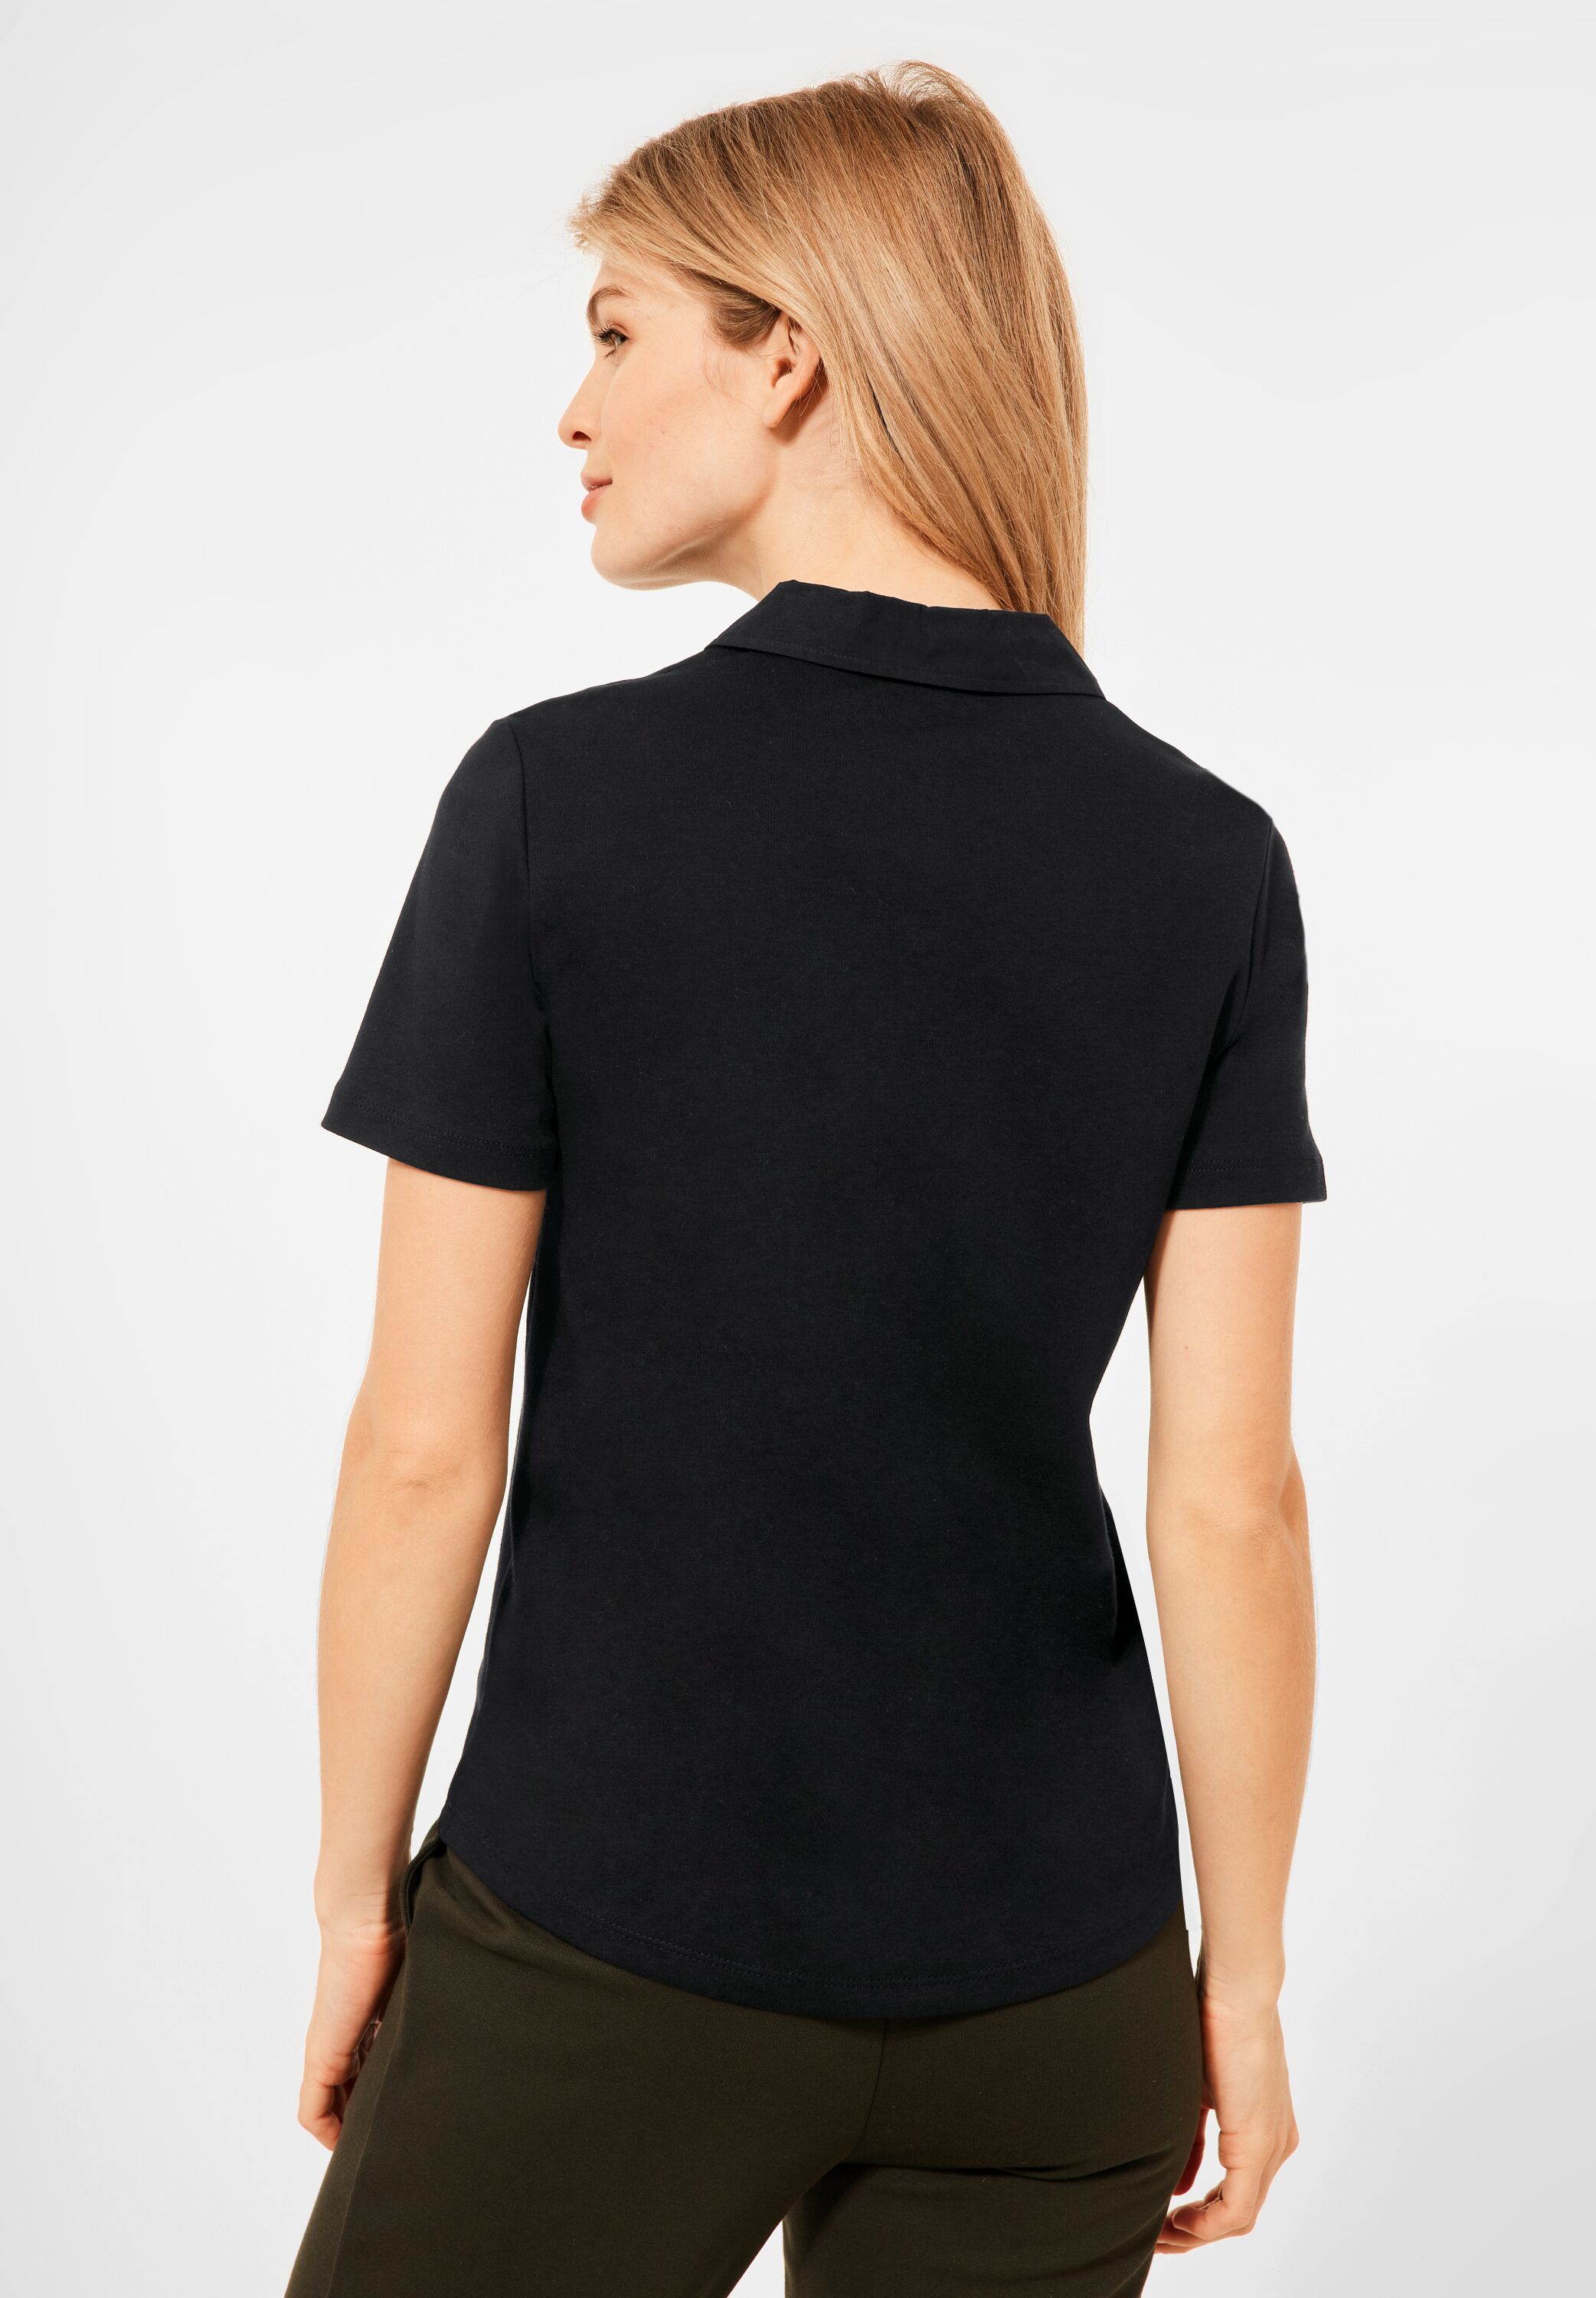 CECIL Poloshirt in Black im SALE reduziert B317622-10001 - CONCEPT Mode